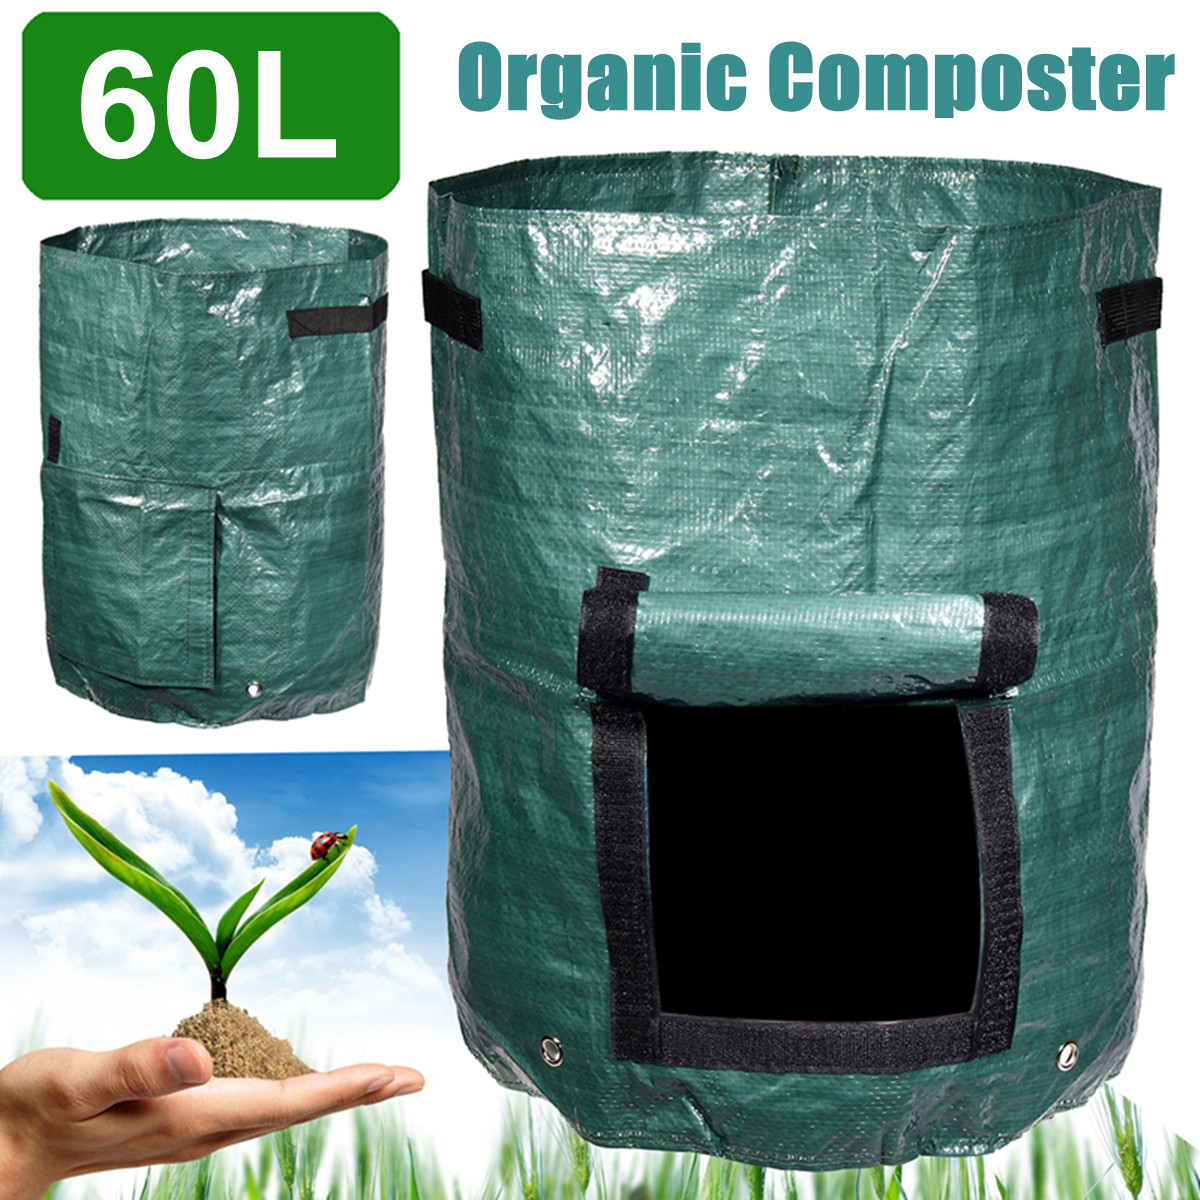 60L-Organic-Kitchen-Composter-Waste-Converter-Bin-Compost-Storage-Garden-Planting-Seedling-Bags-1323594-1